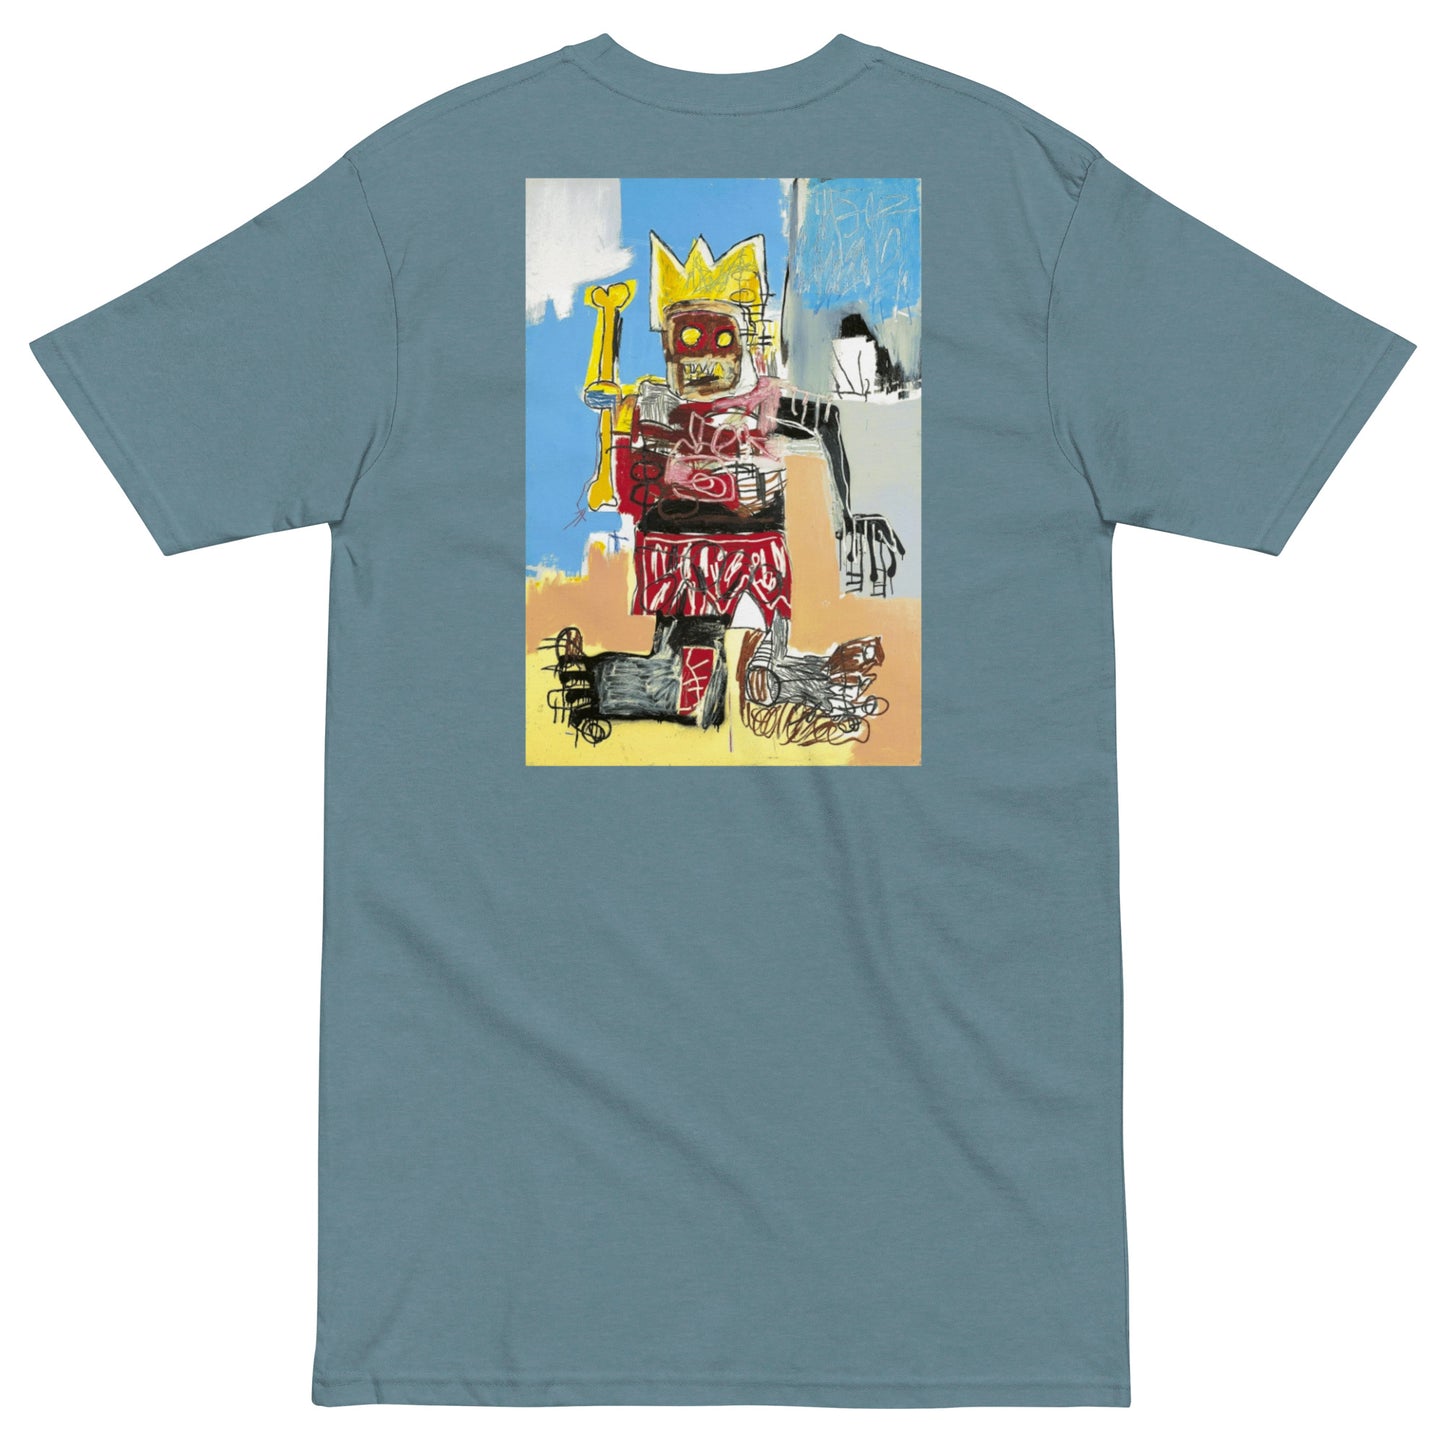 Jean-Michel Basquiat "Untitled" 1982 Artwork Embroidered + Printed Premium Streetwear T-shirt Agave Blue